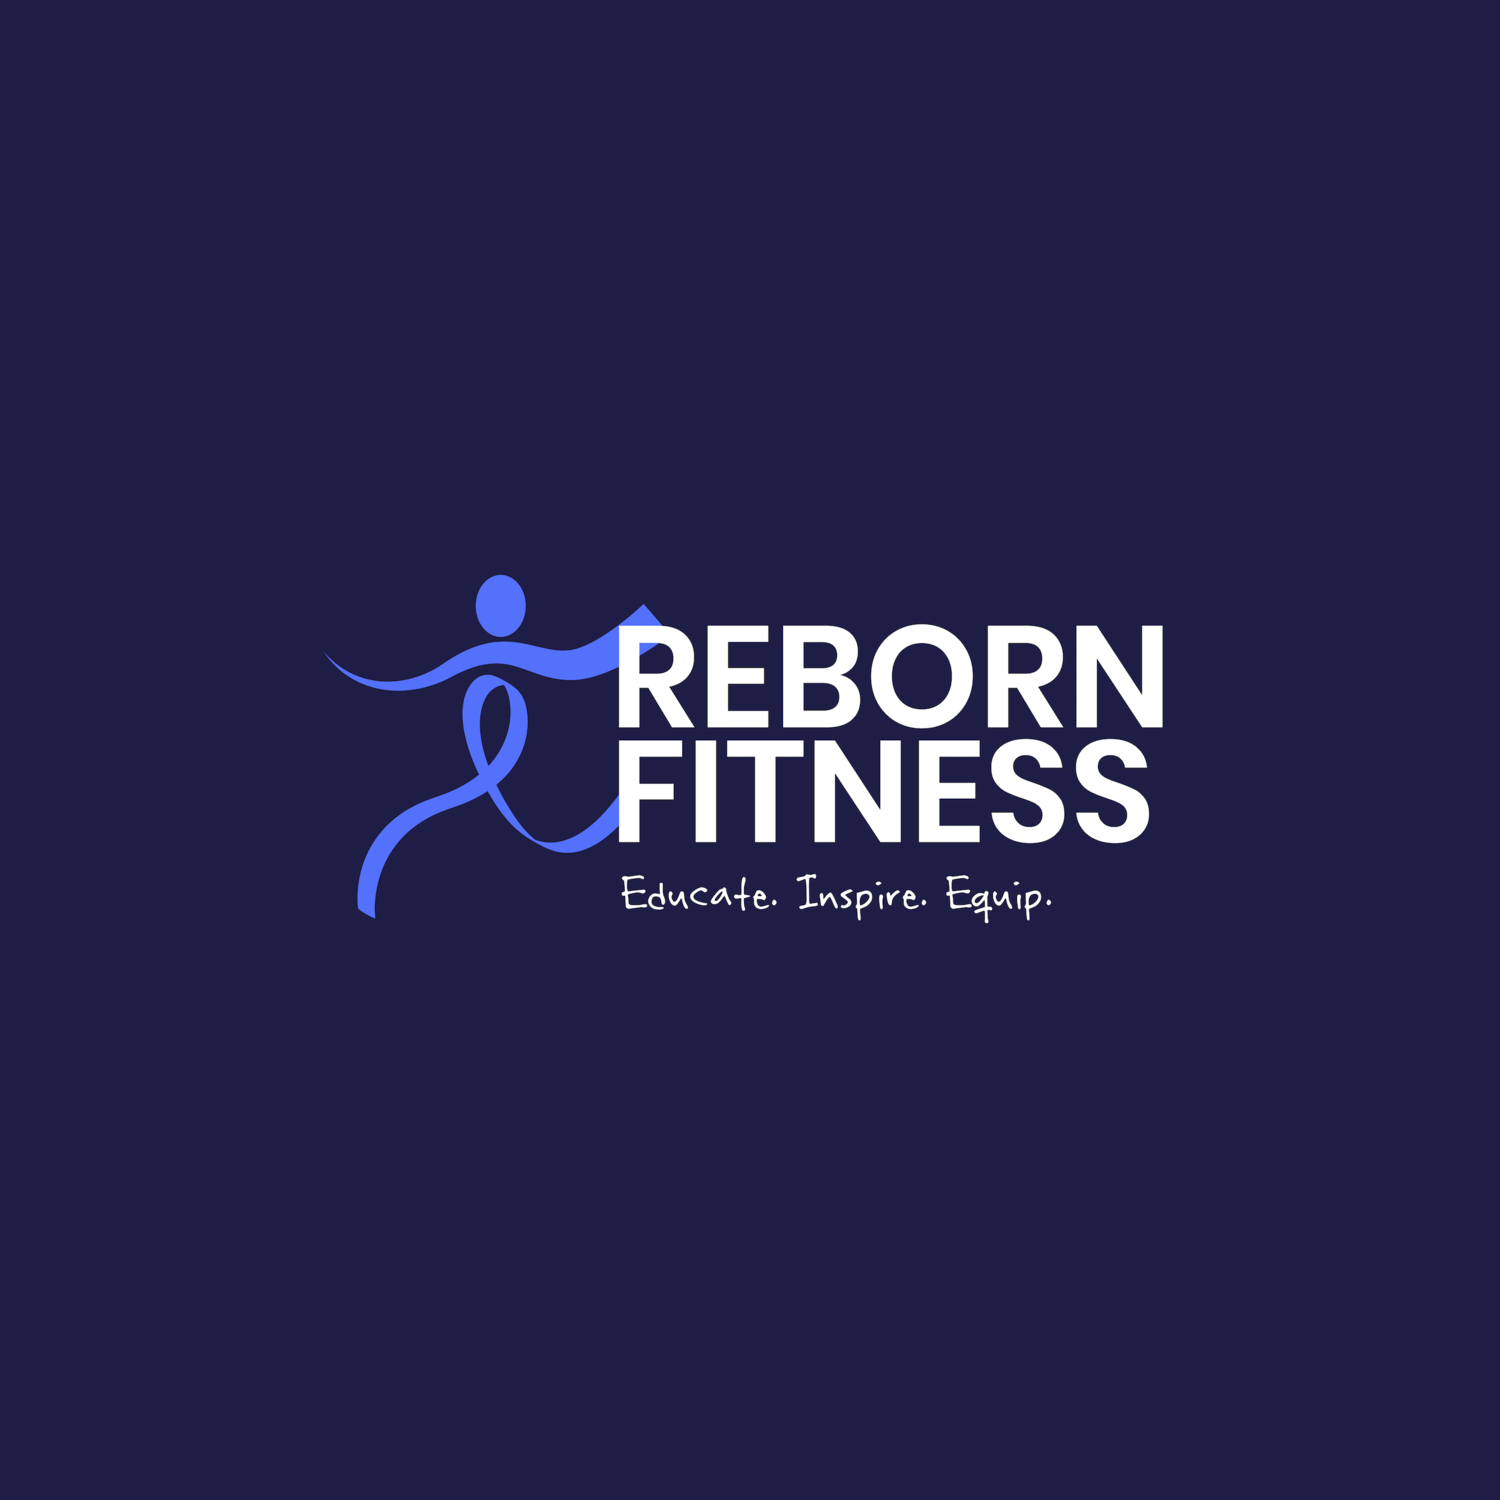 ReBorn Fitness